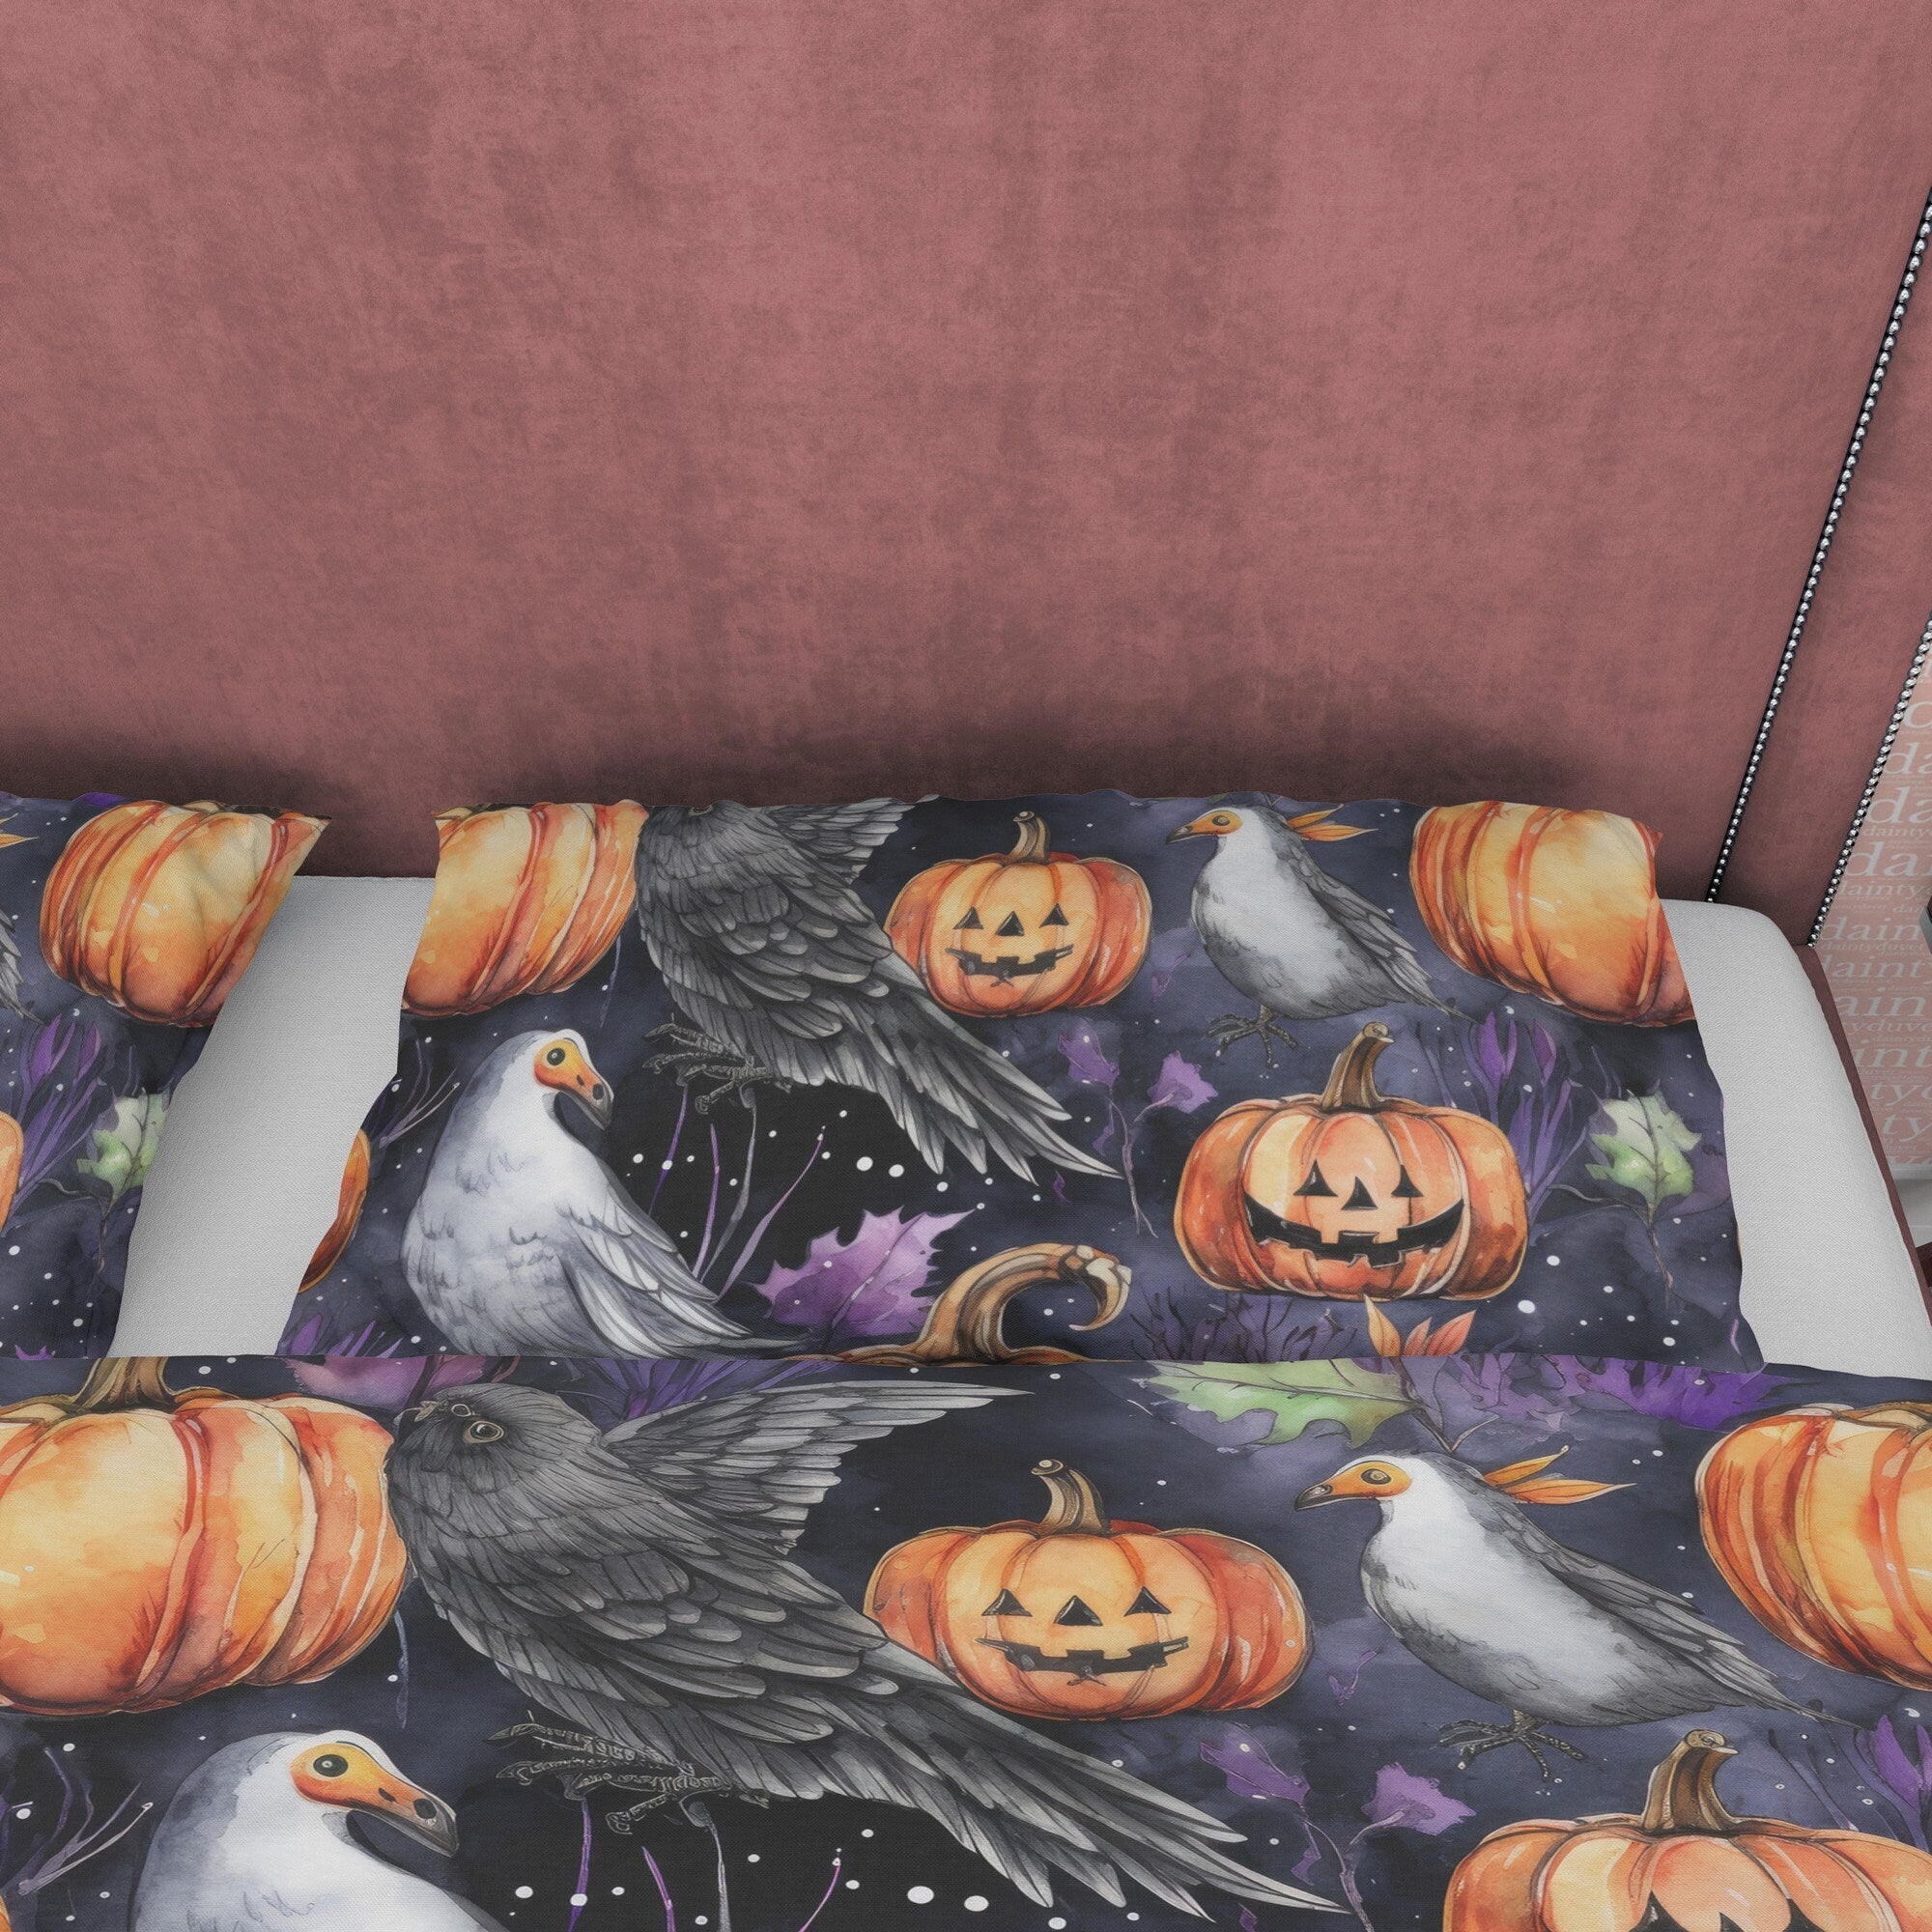 White Bird & Pumpkin Duvet Cover Set, Spooky Bedding, Retro Aesthetic Halloween Room Decor, Farmhouse Quilt Cover, Autumn Bedspread